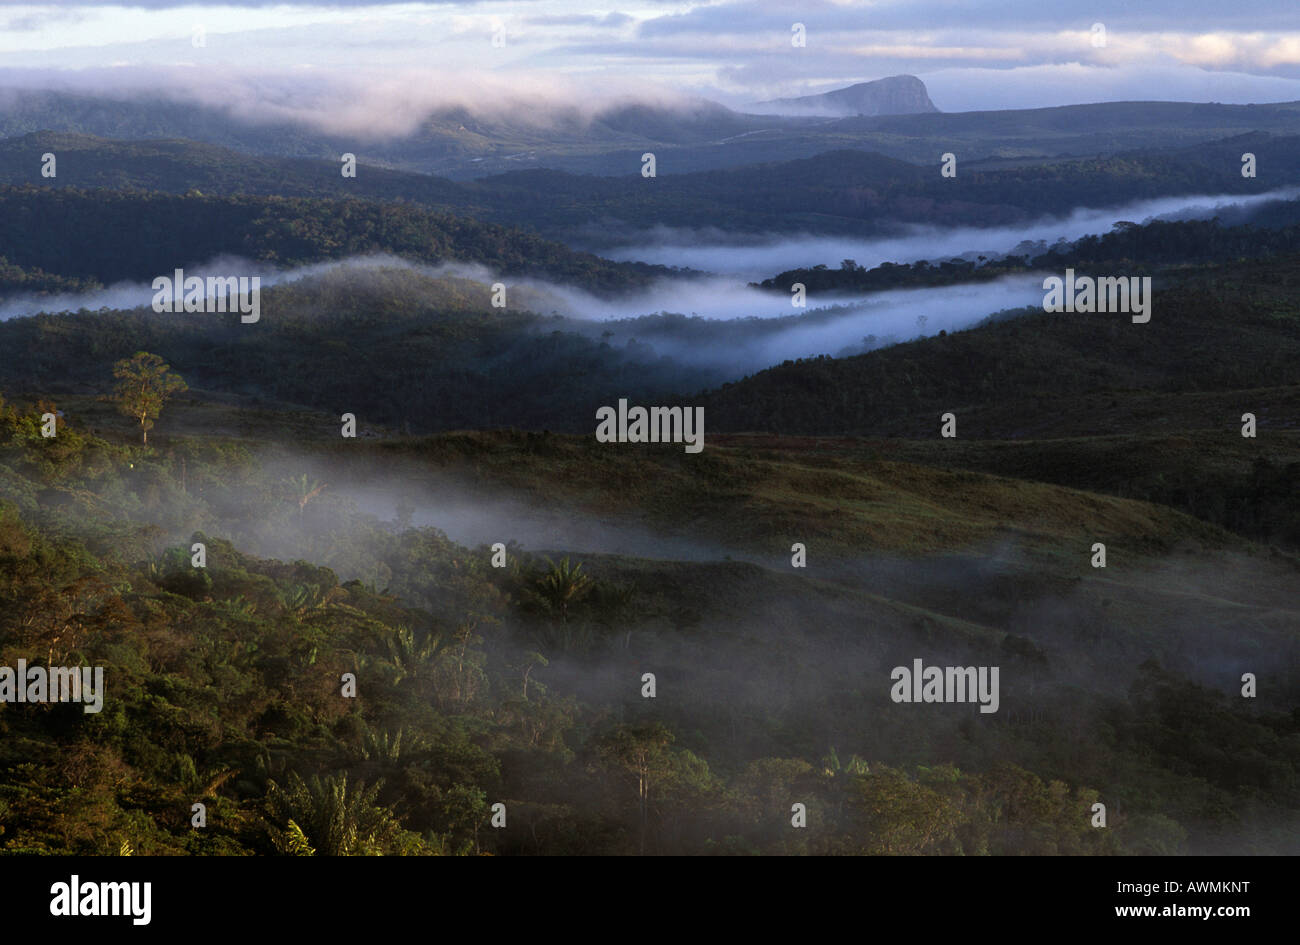 Morning mist over a savanna landscape, El Pauji, Gran Sabana, Venezuela, South America Stock Photo